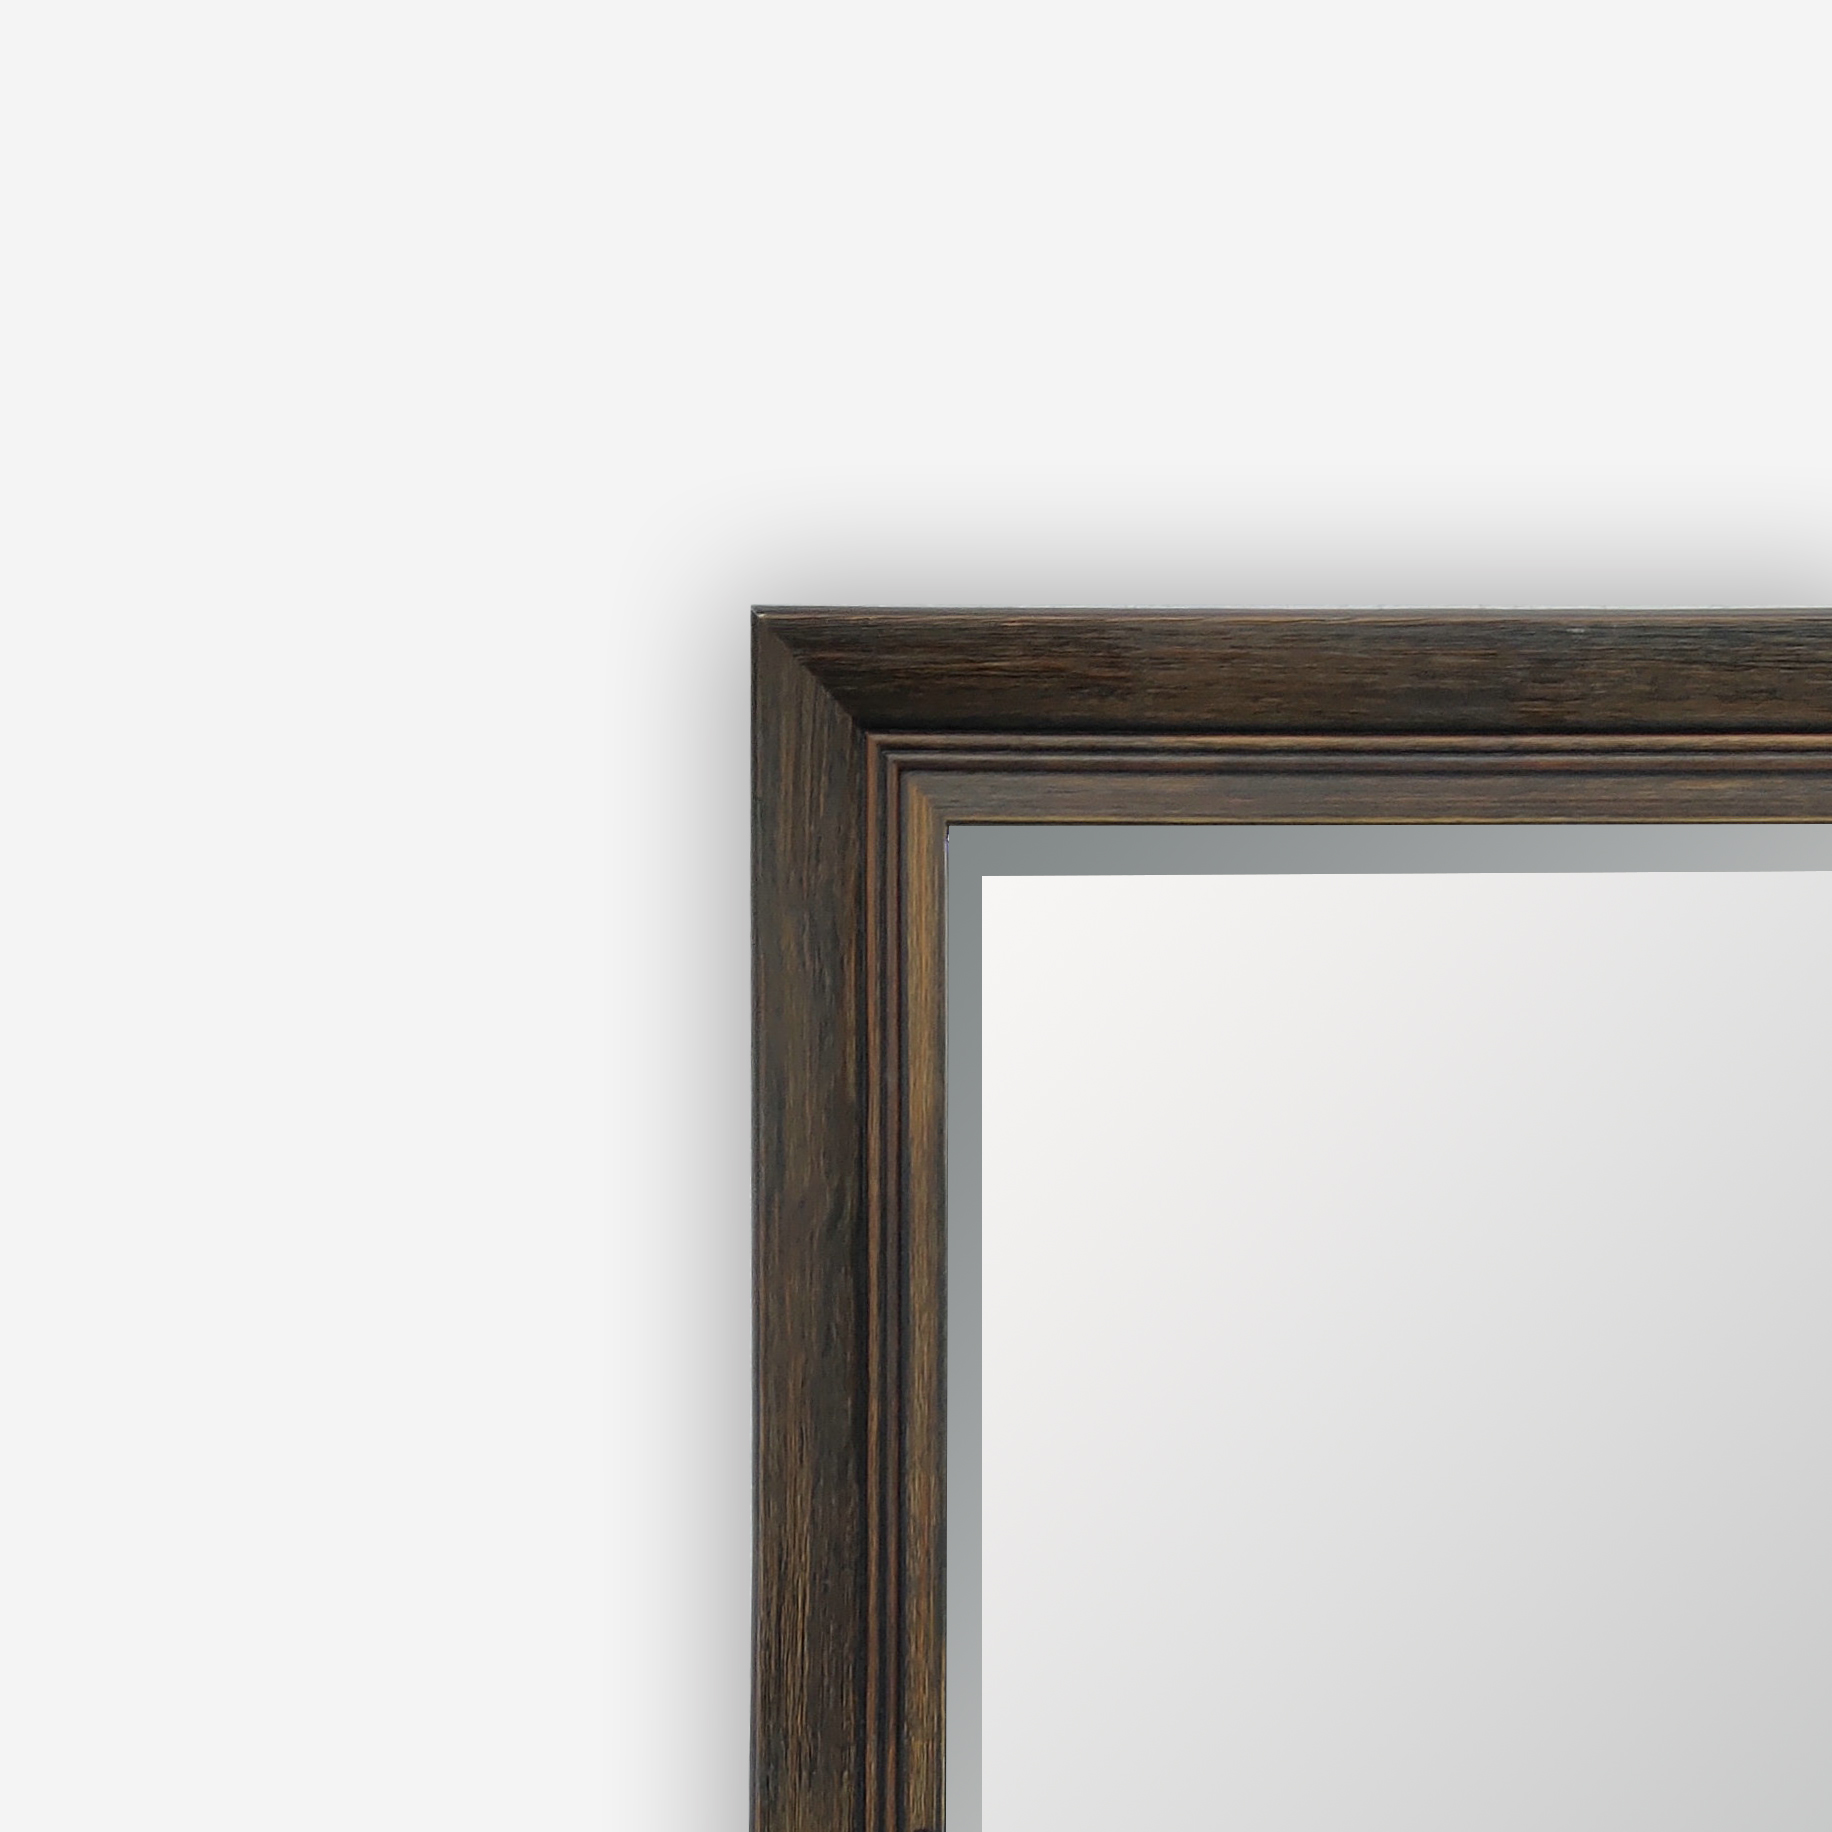 wood and mirror wall decor